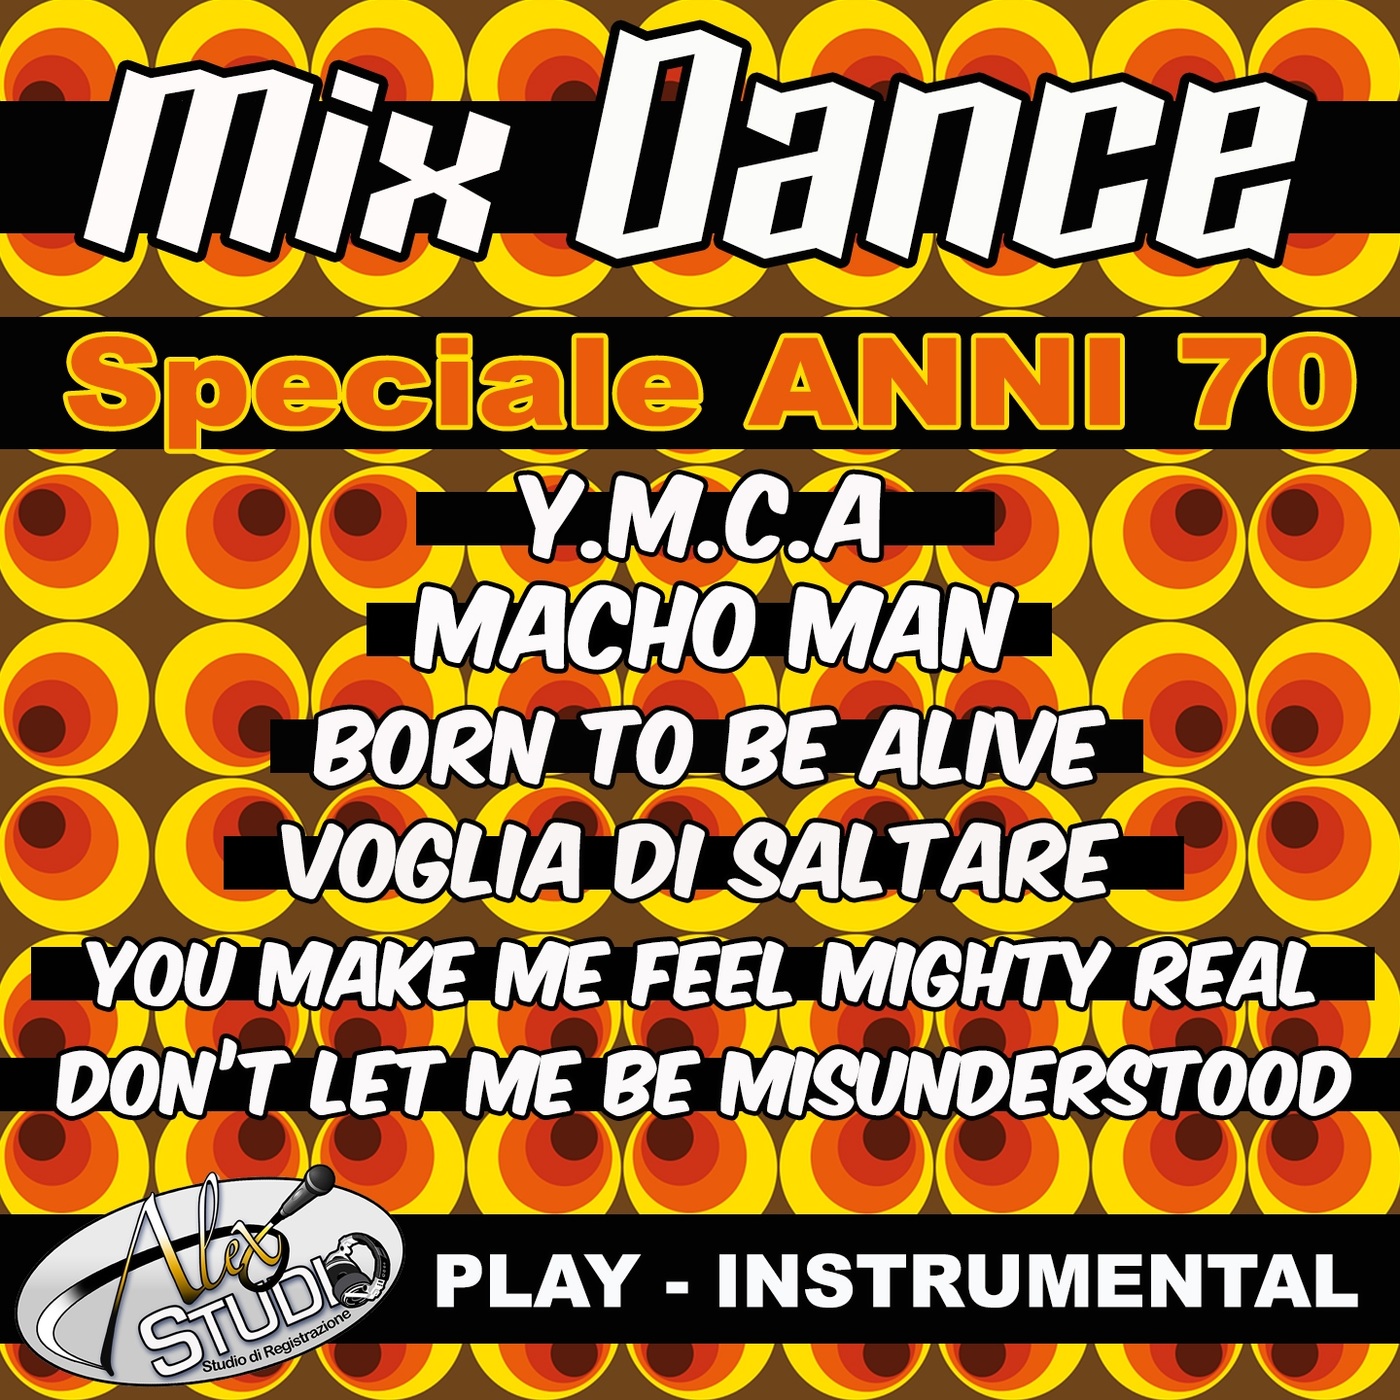 Alex Studio - Mix Dance (Speciale Anni 70) / Believe France